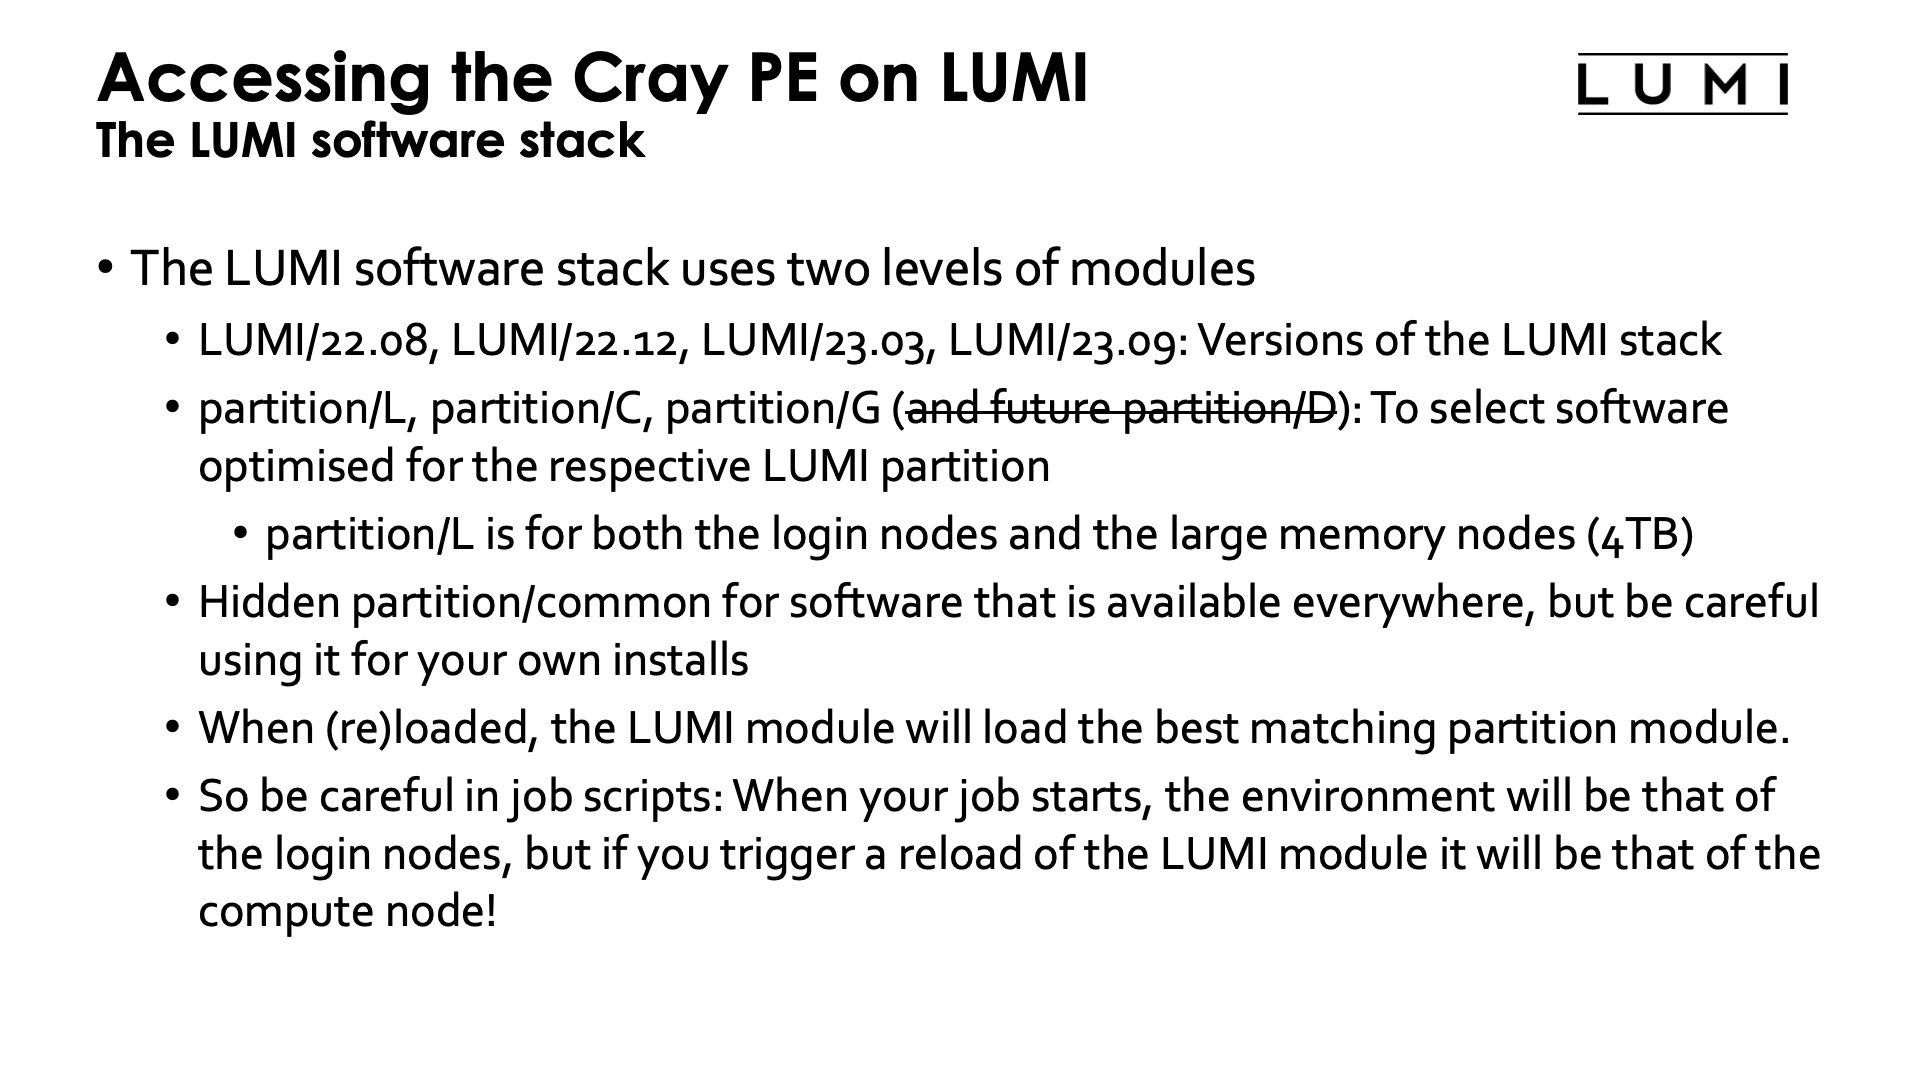 Accessing the Cray PE on LUMI slide 3